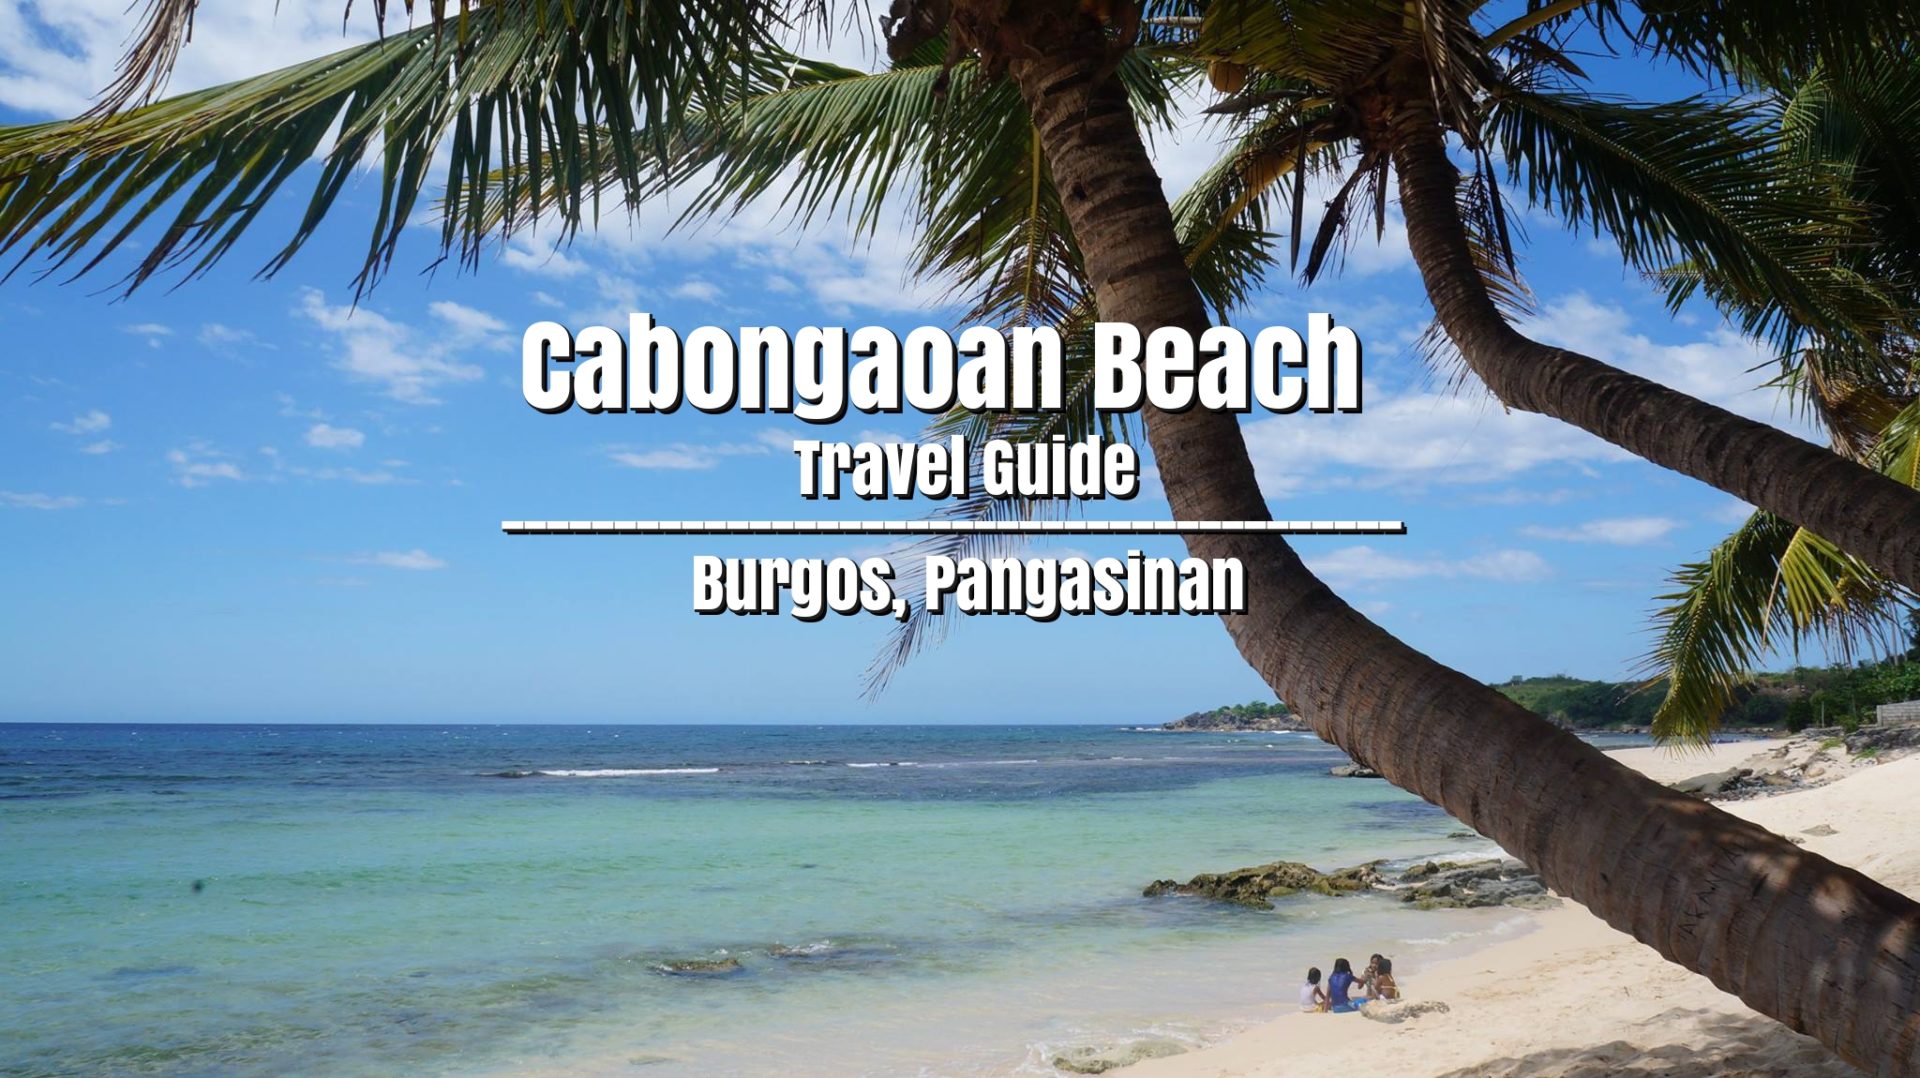 Cabongaoan Beach Travel Guide | Burgos, Pangasinan